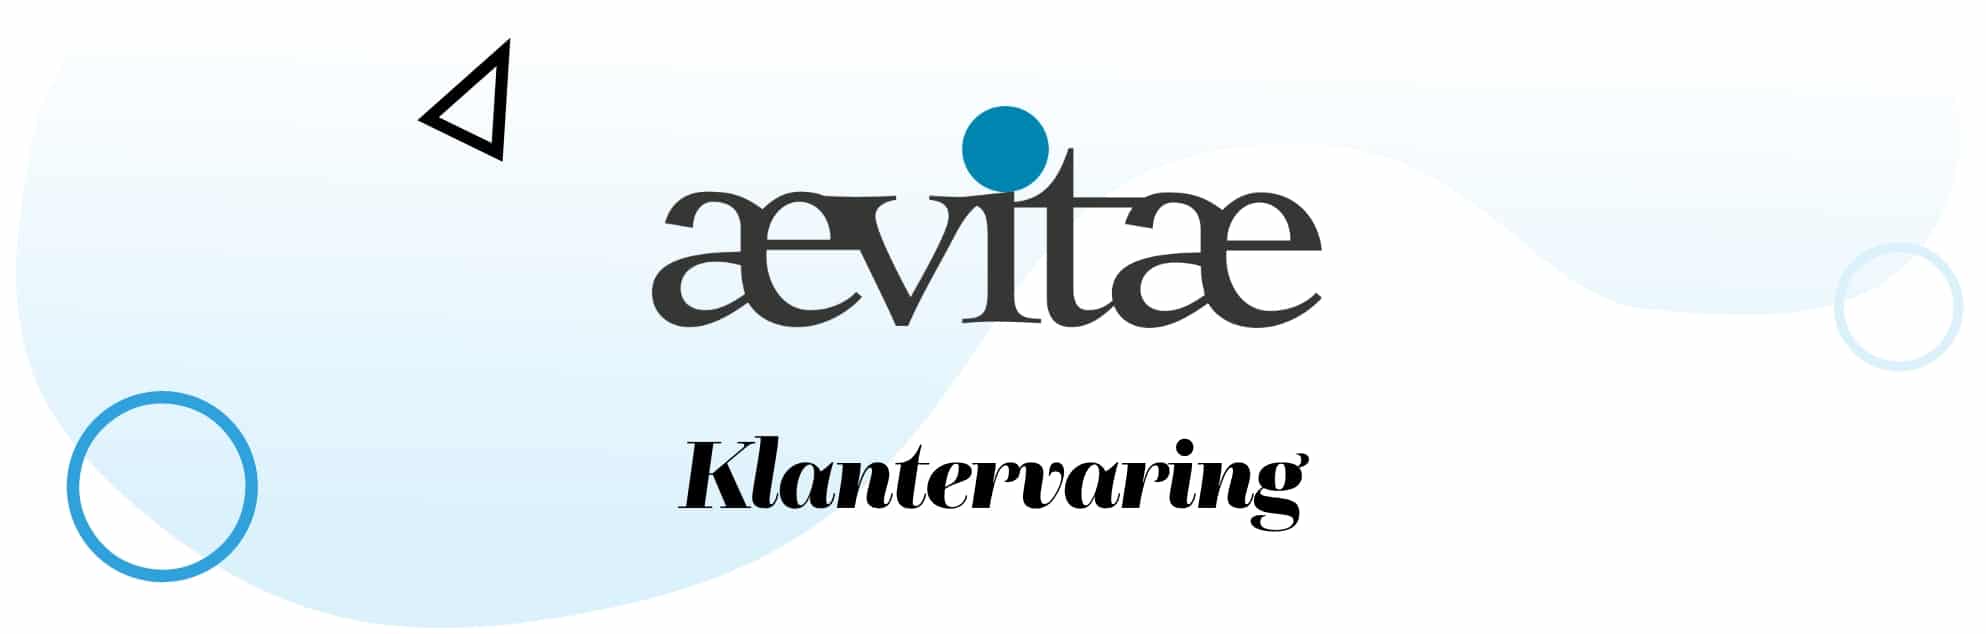 Aevitae klantervaring